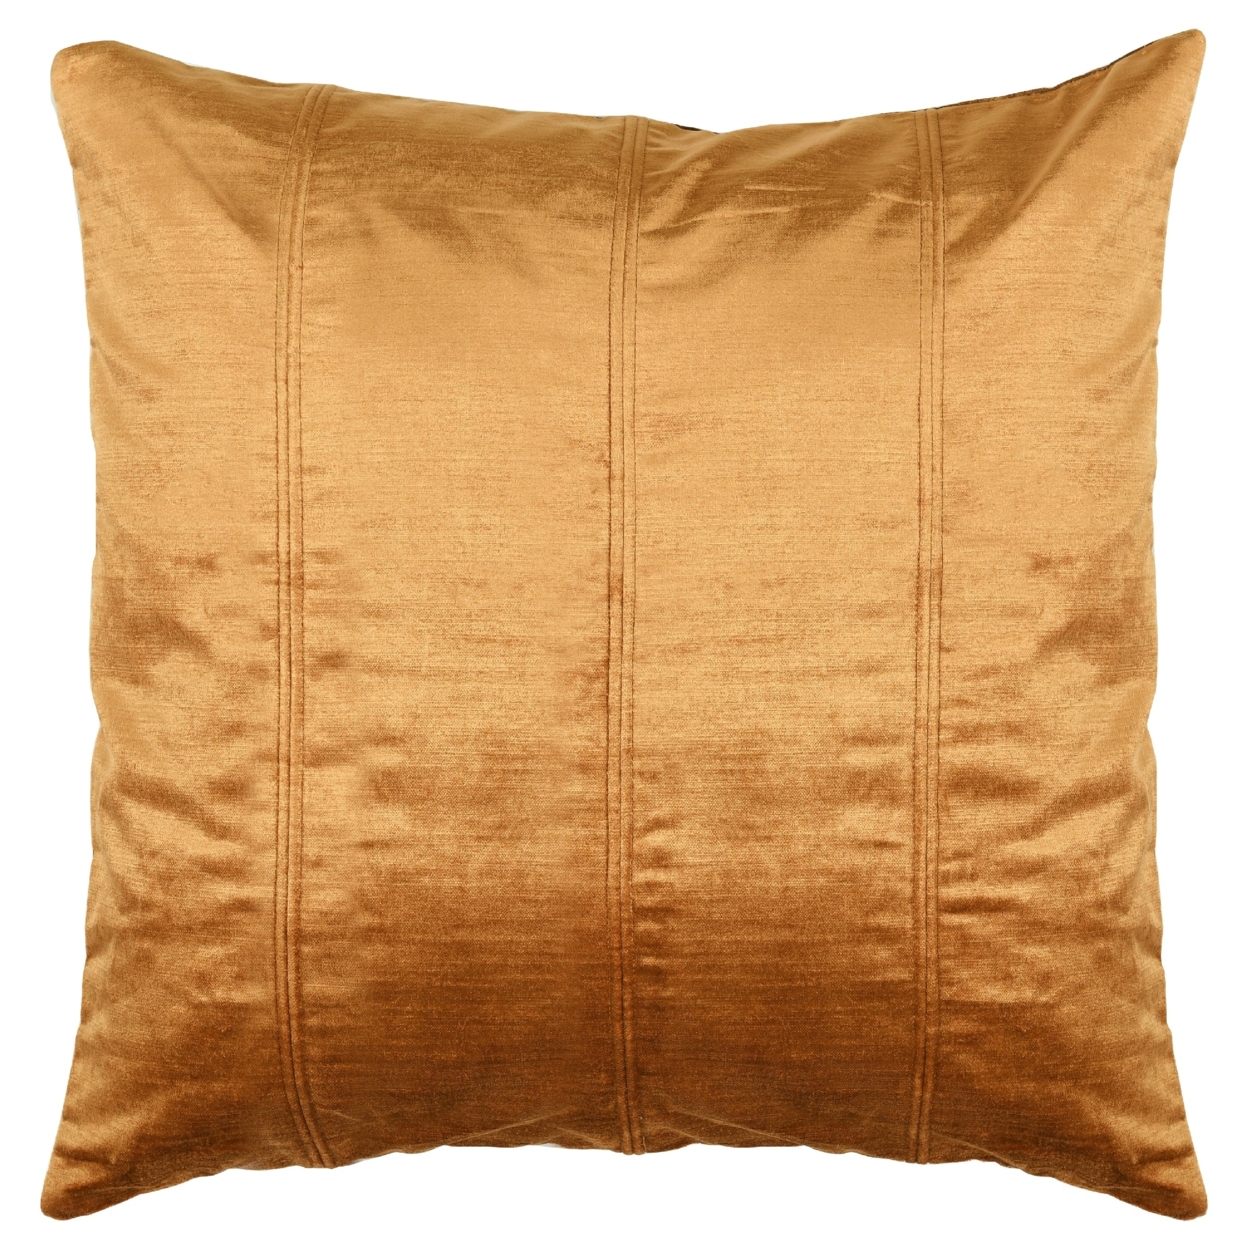 Chad 20 Inch Square Velvet Decorative Throw Pillow, Plush, Copper- Saltoro Sherpi